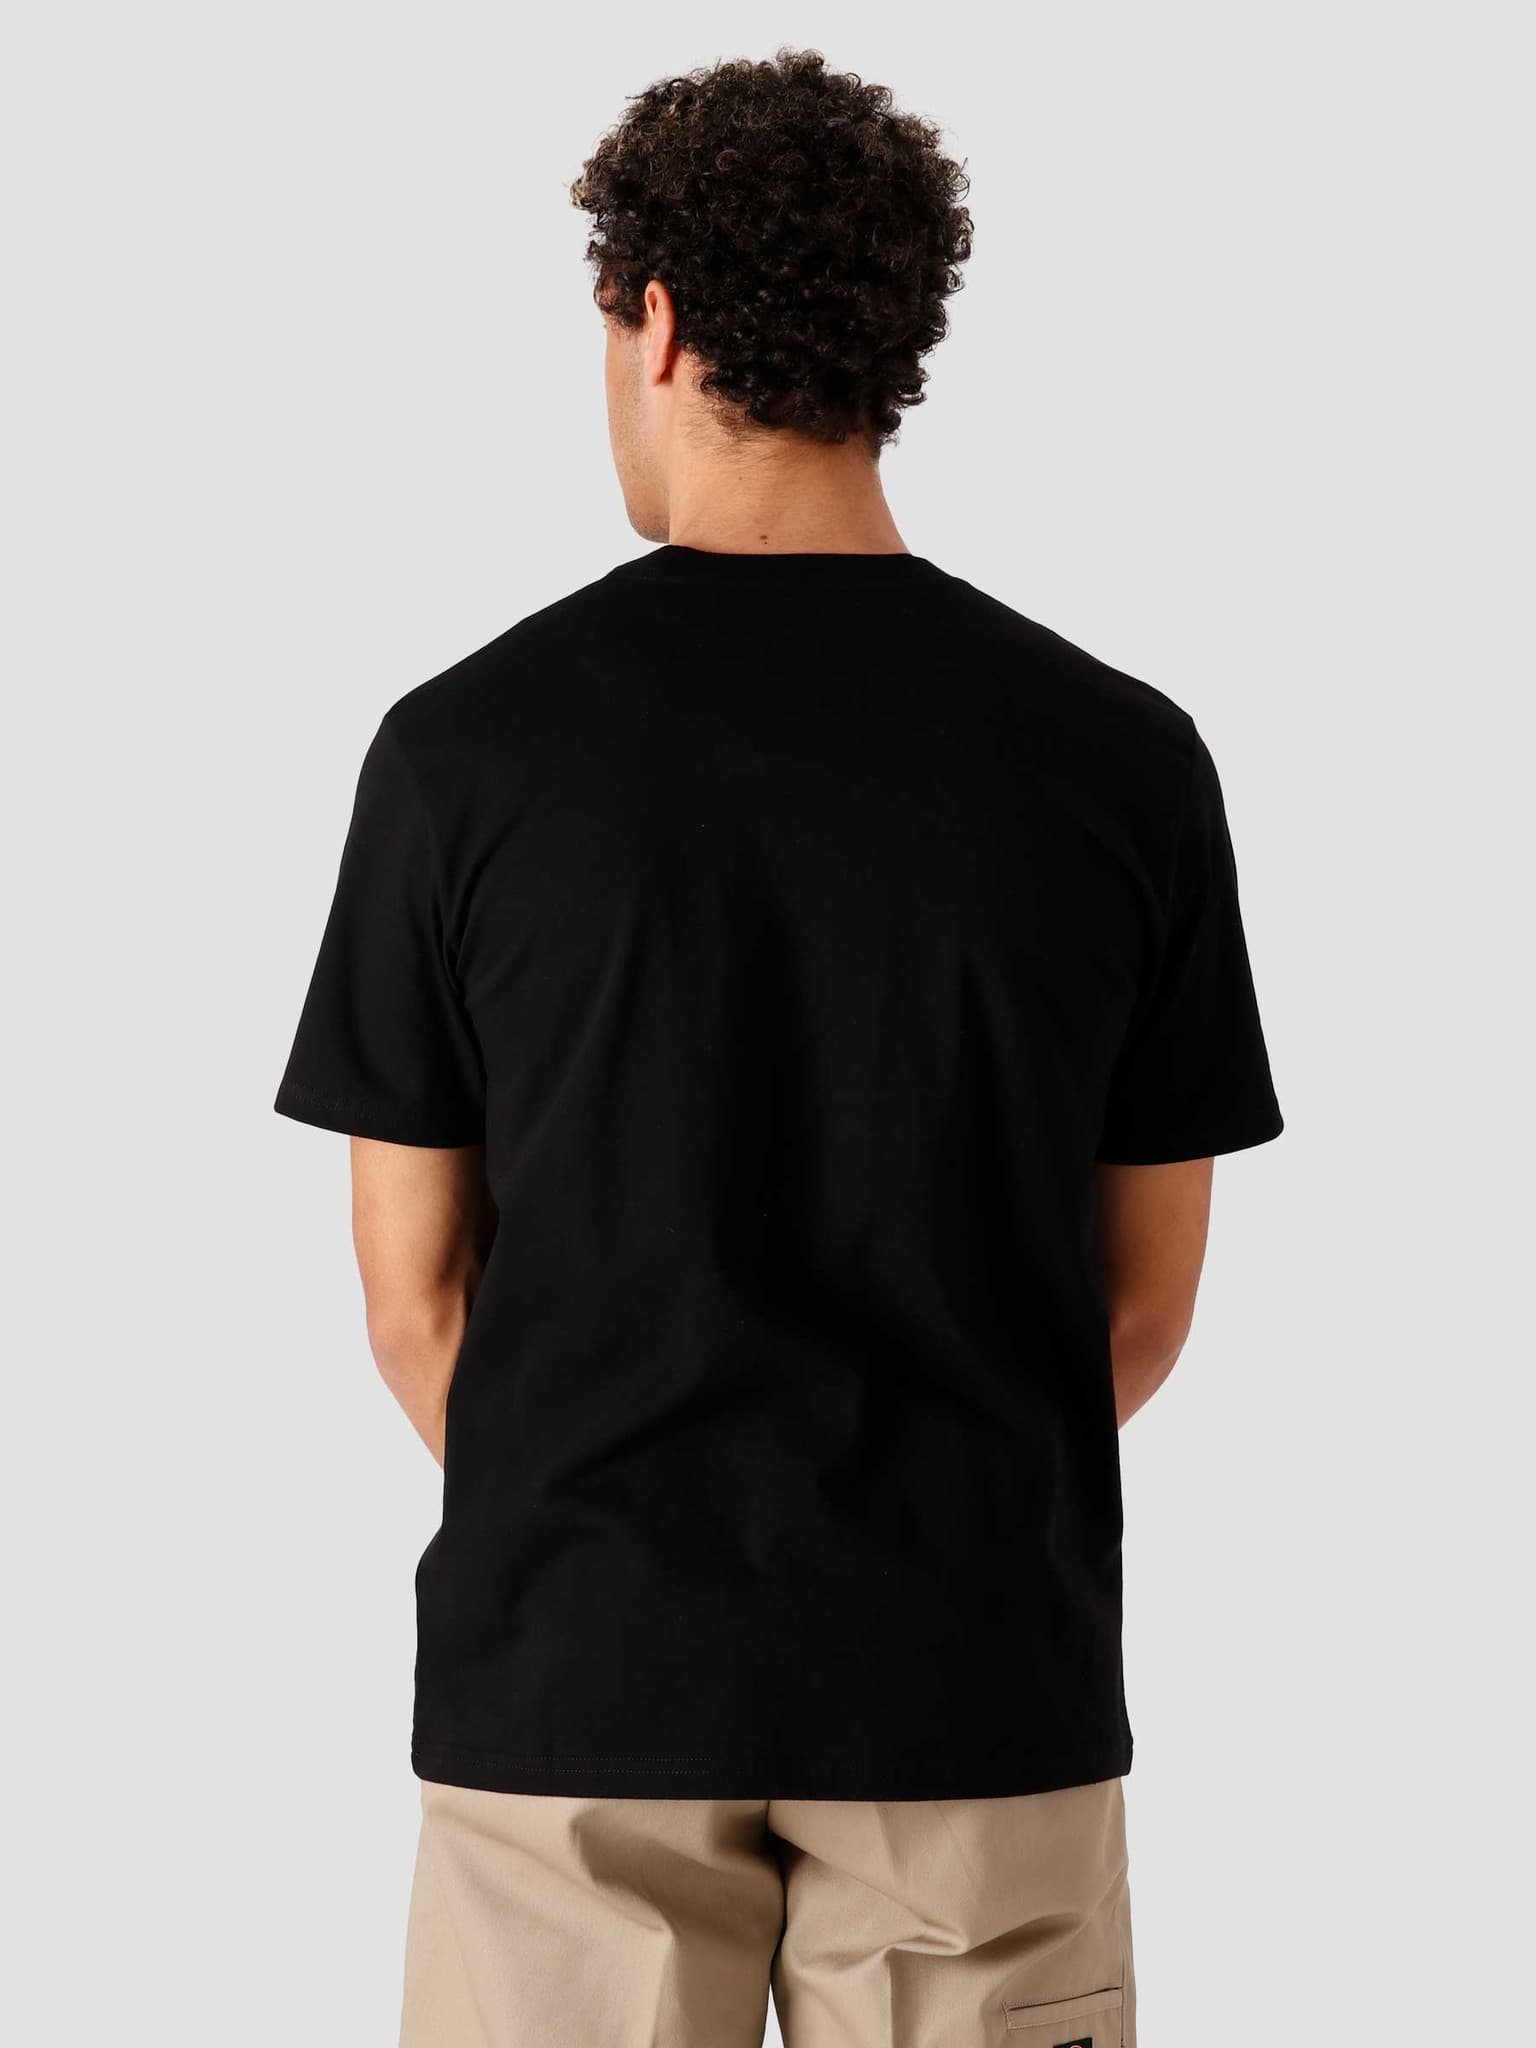 SS Earthly Pleasures T Shirt Black I029018-8900